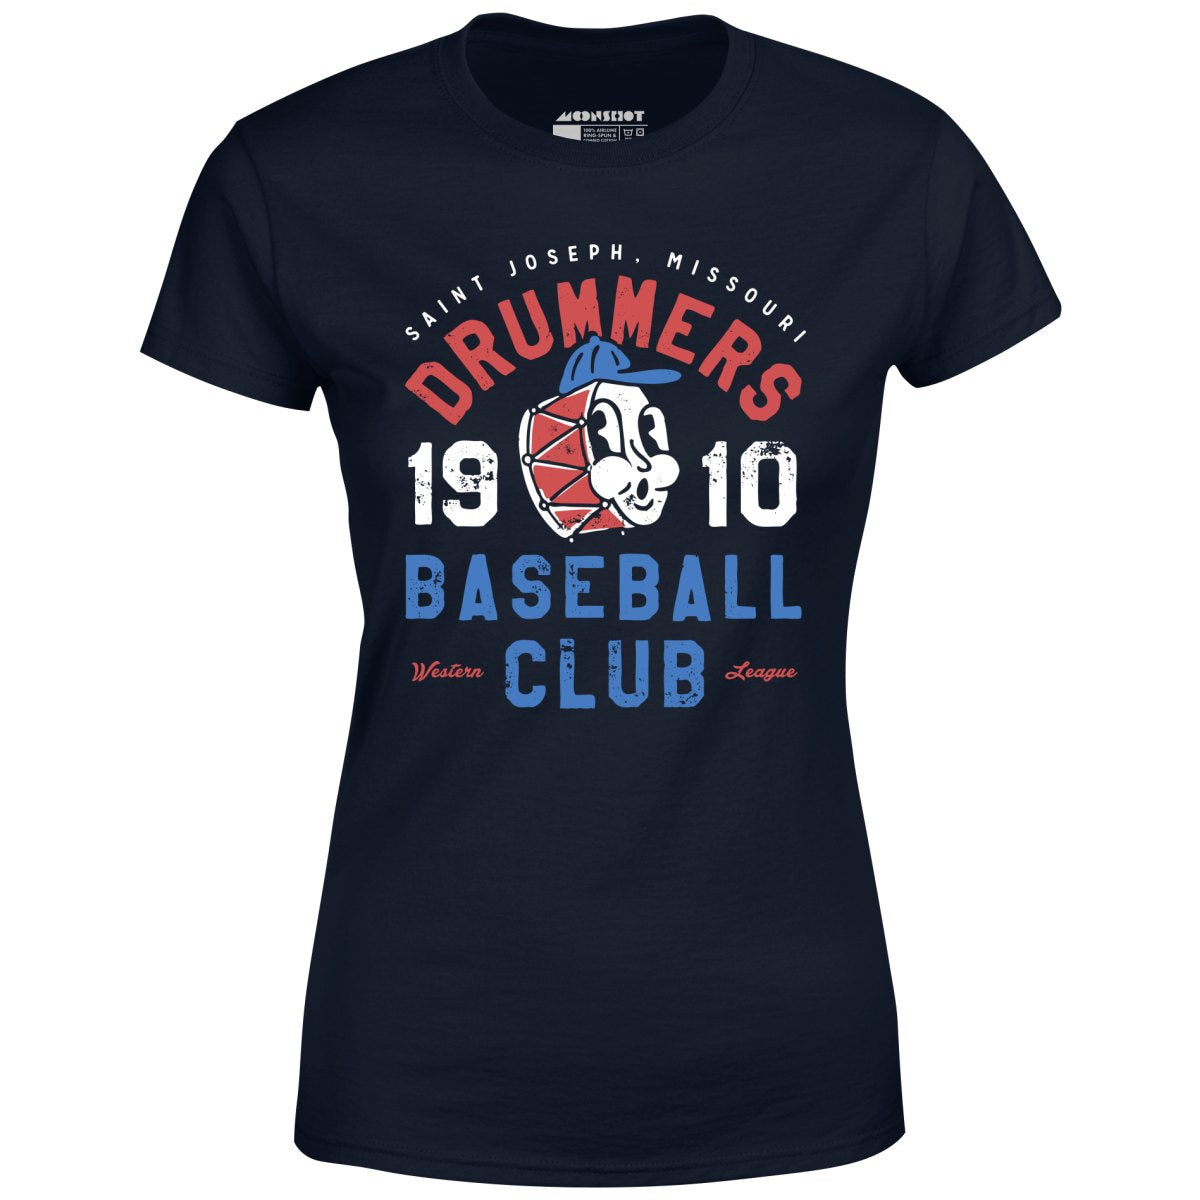 Saint Joseph Drummers - Missouri - Vintage Defunct Baseball Teams - Women's T-Shirt